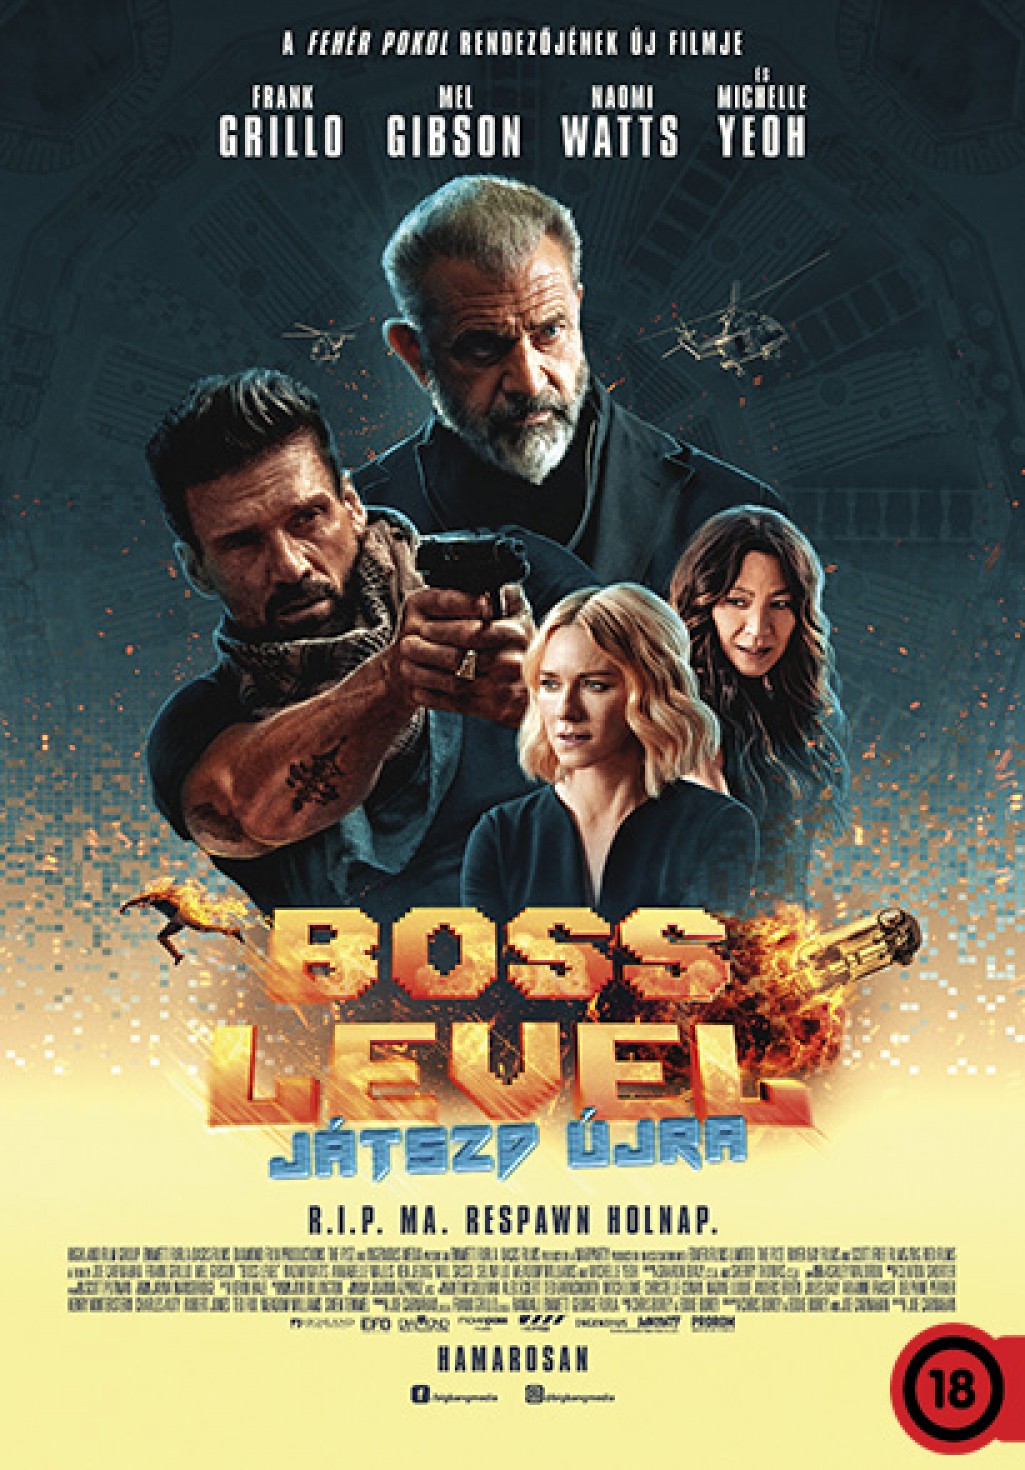 Boss Level - Játszd újra (Boss level) (2021) 3283_24ce06685bbb